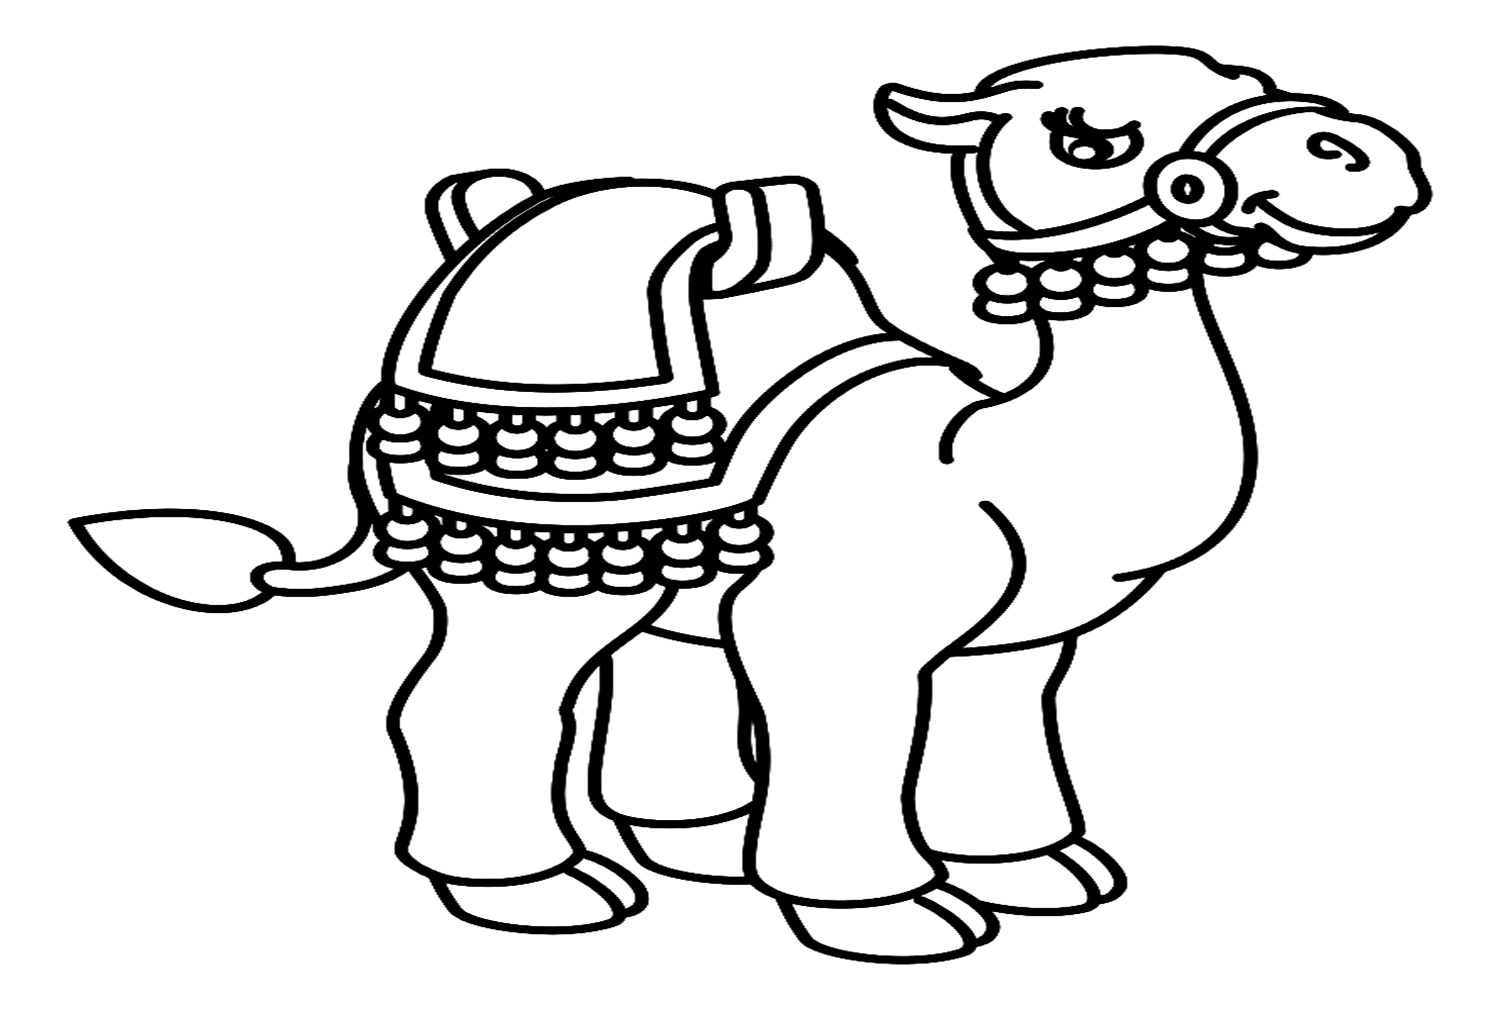 Camello de dibujos animados simple de Camel